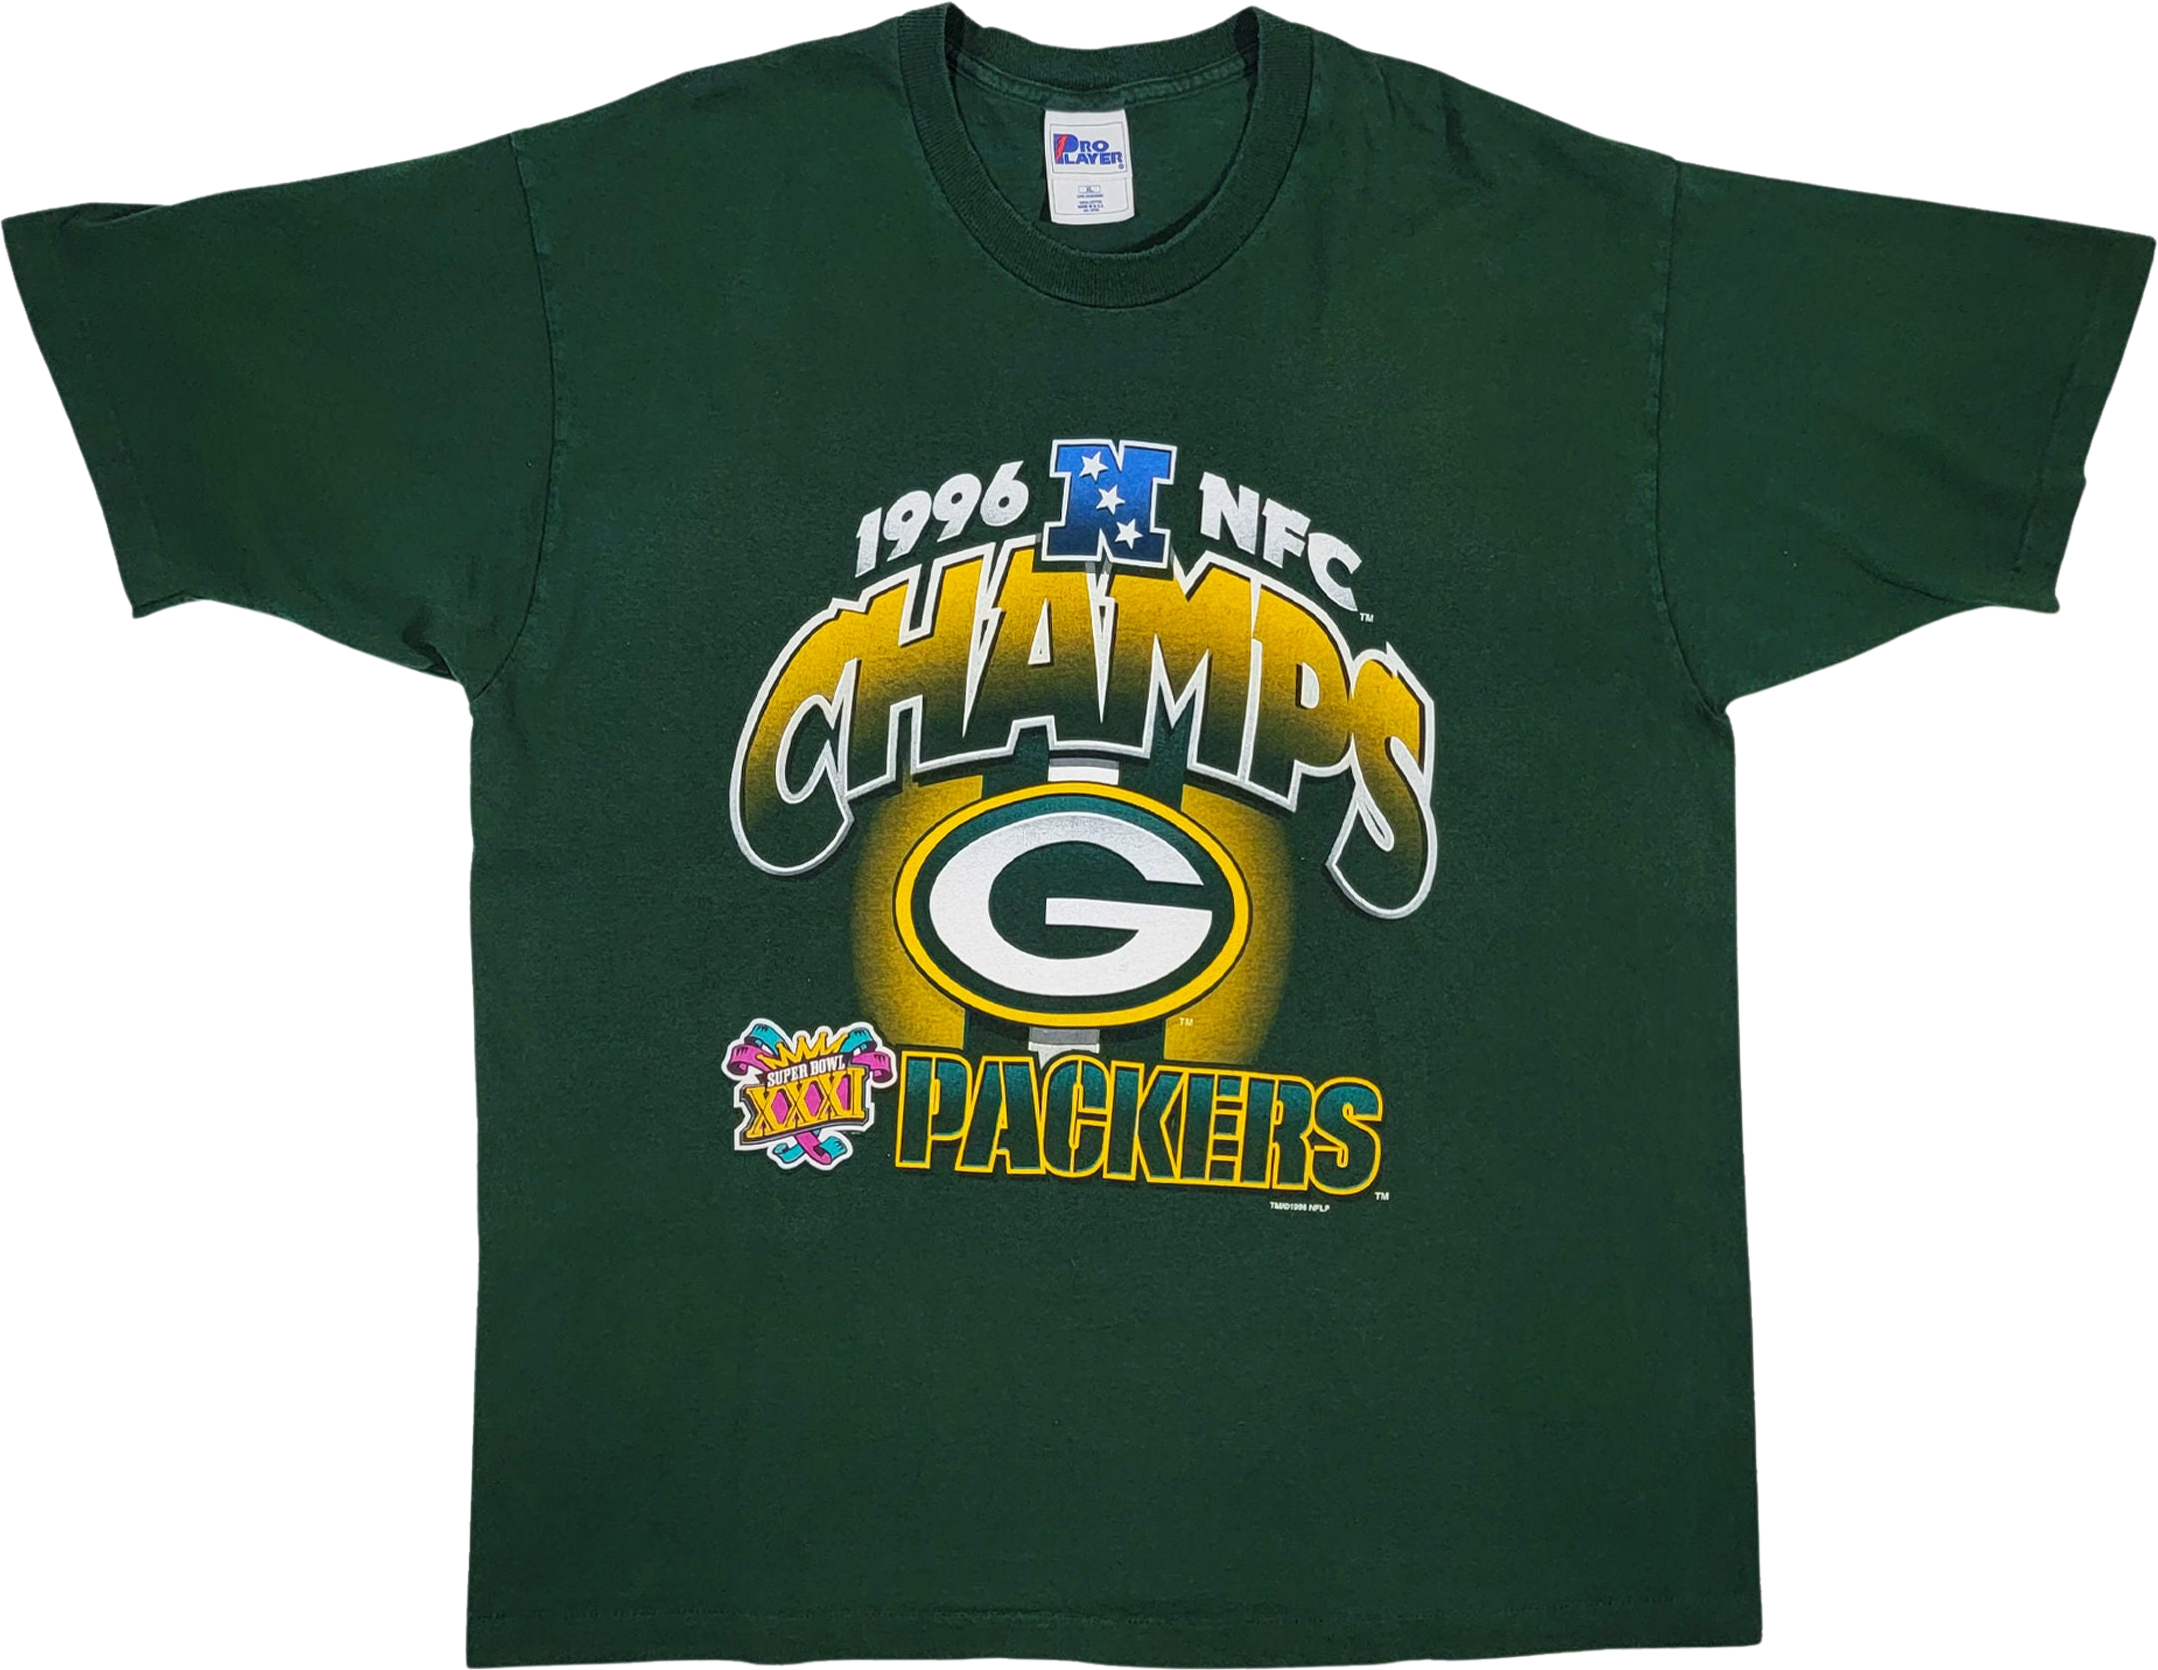 FreshtoDeathVintage 90's Green Bay Packers Pro Player Football 100% Cotton T-Shirt Size L/XL